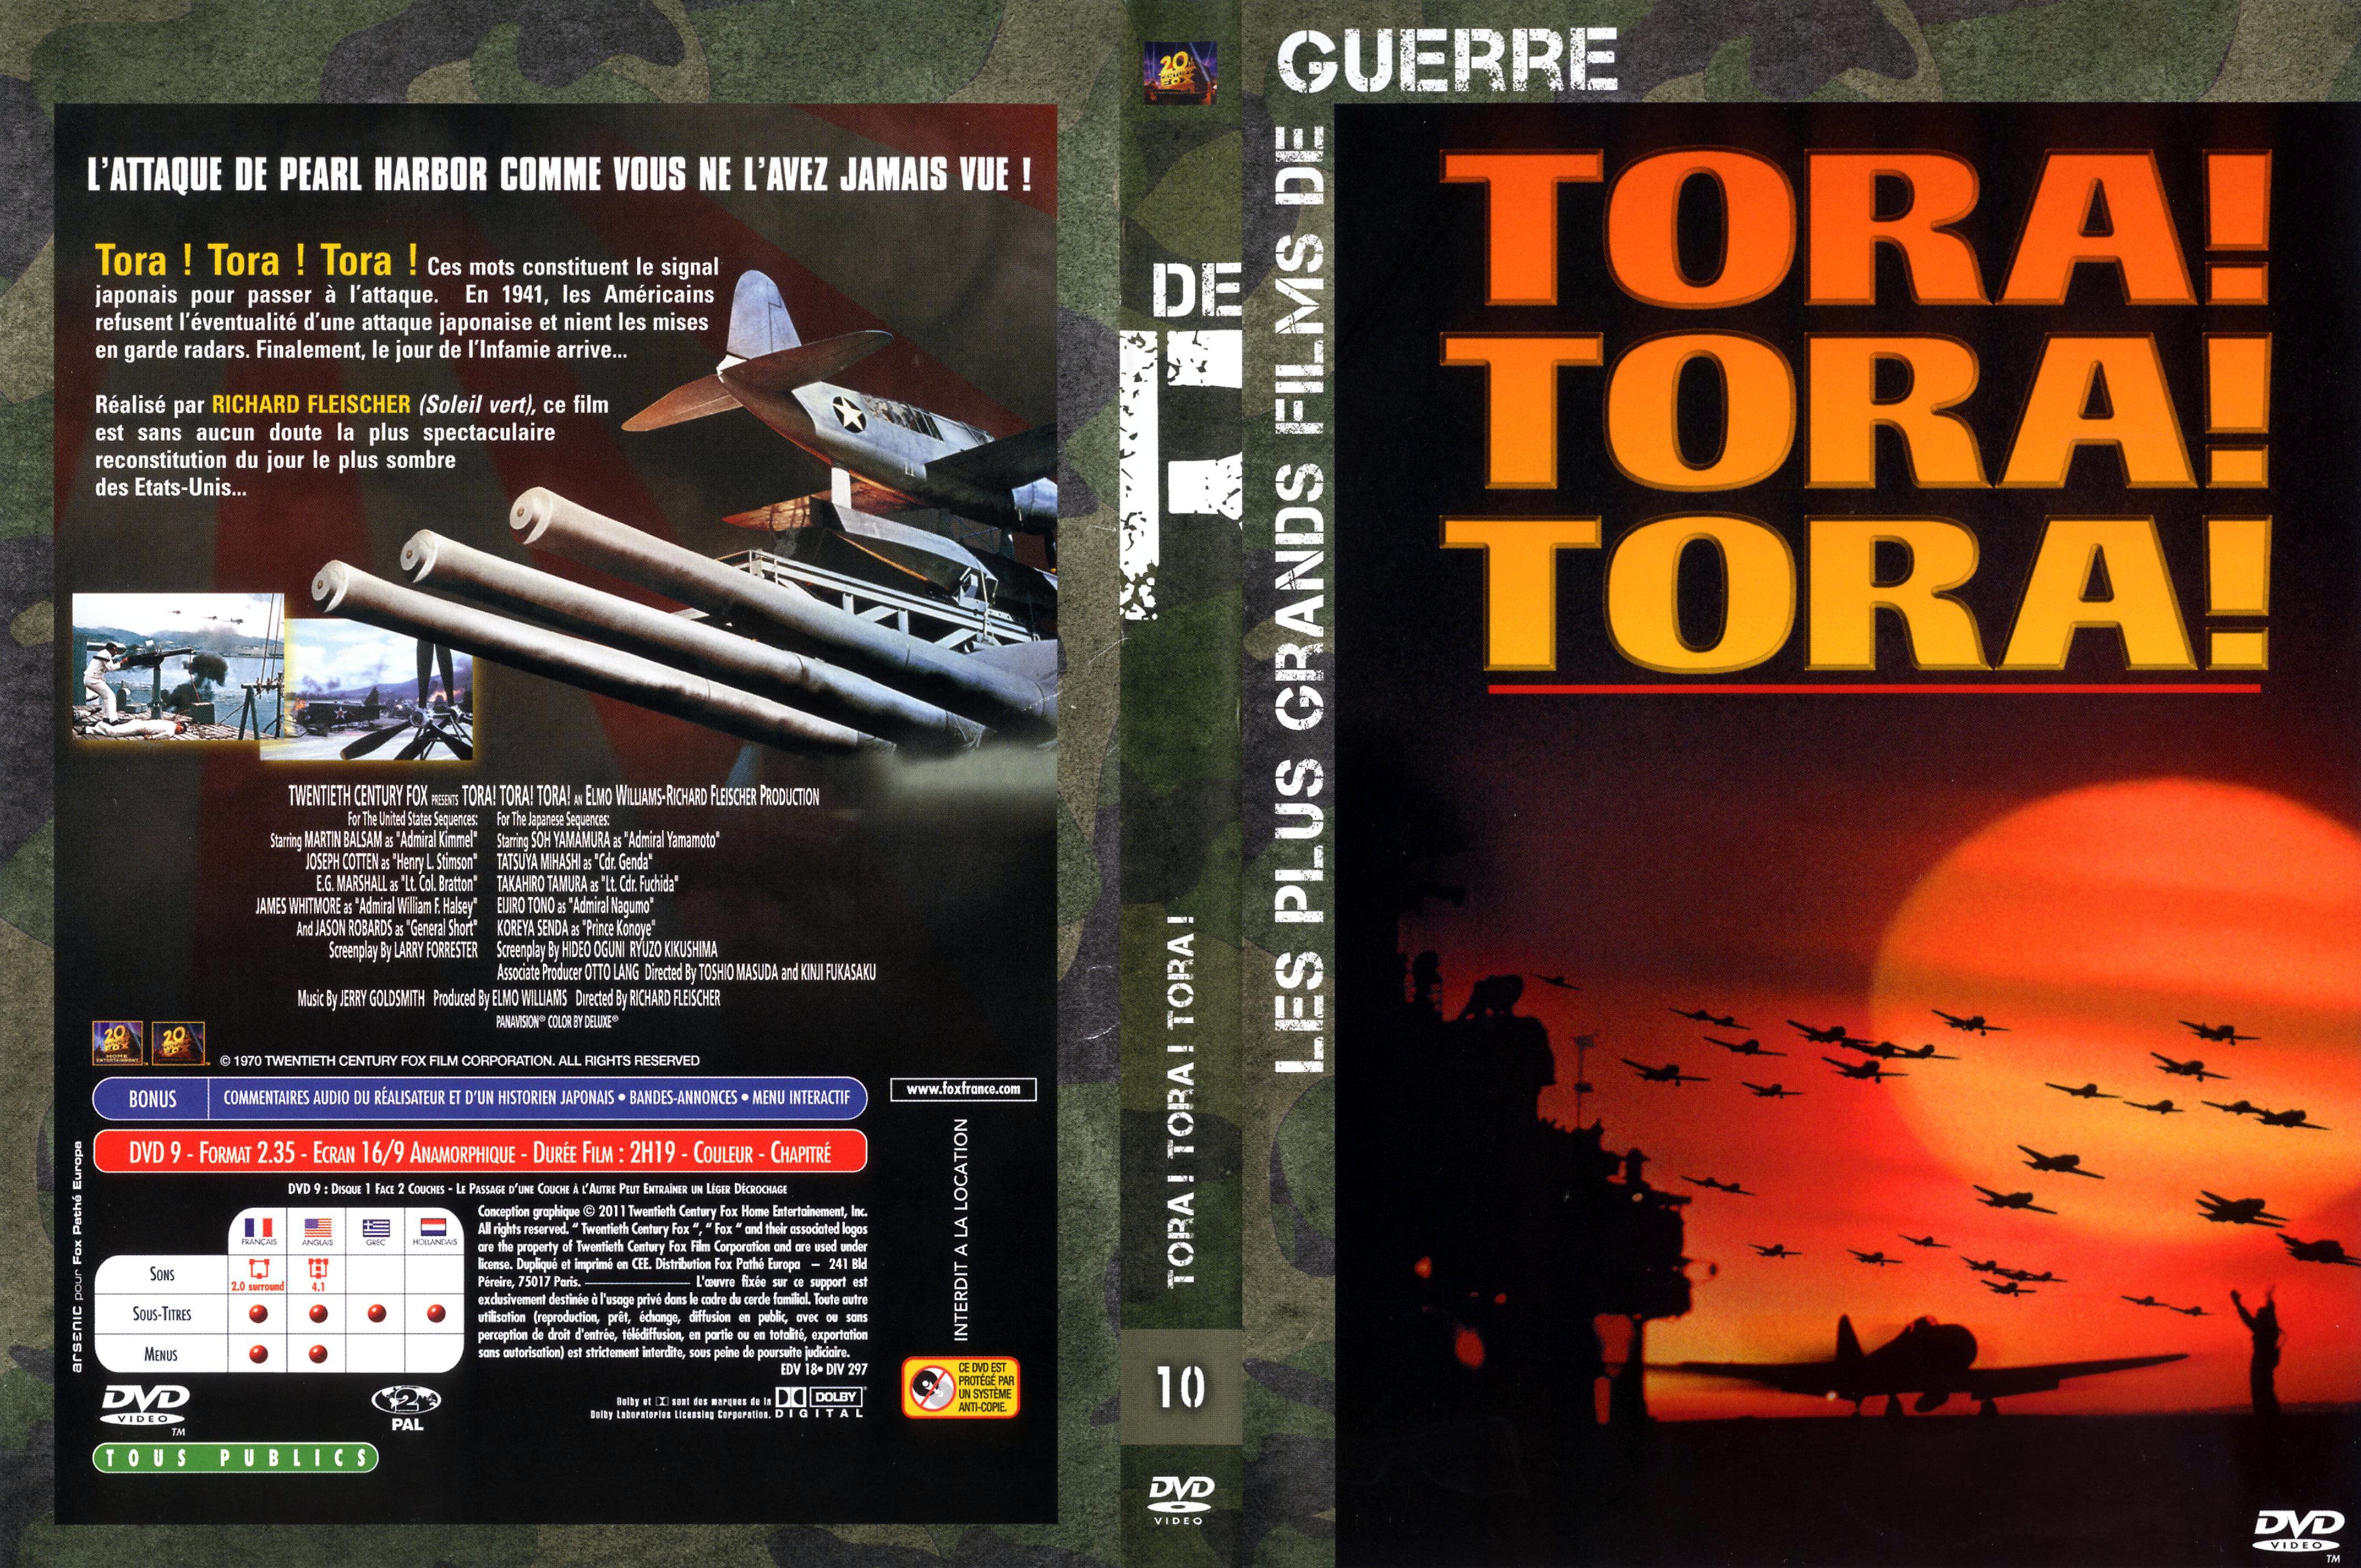 Jaquette DVD Tora Tora Tora v3